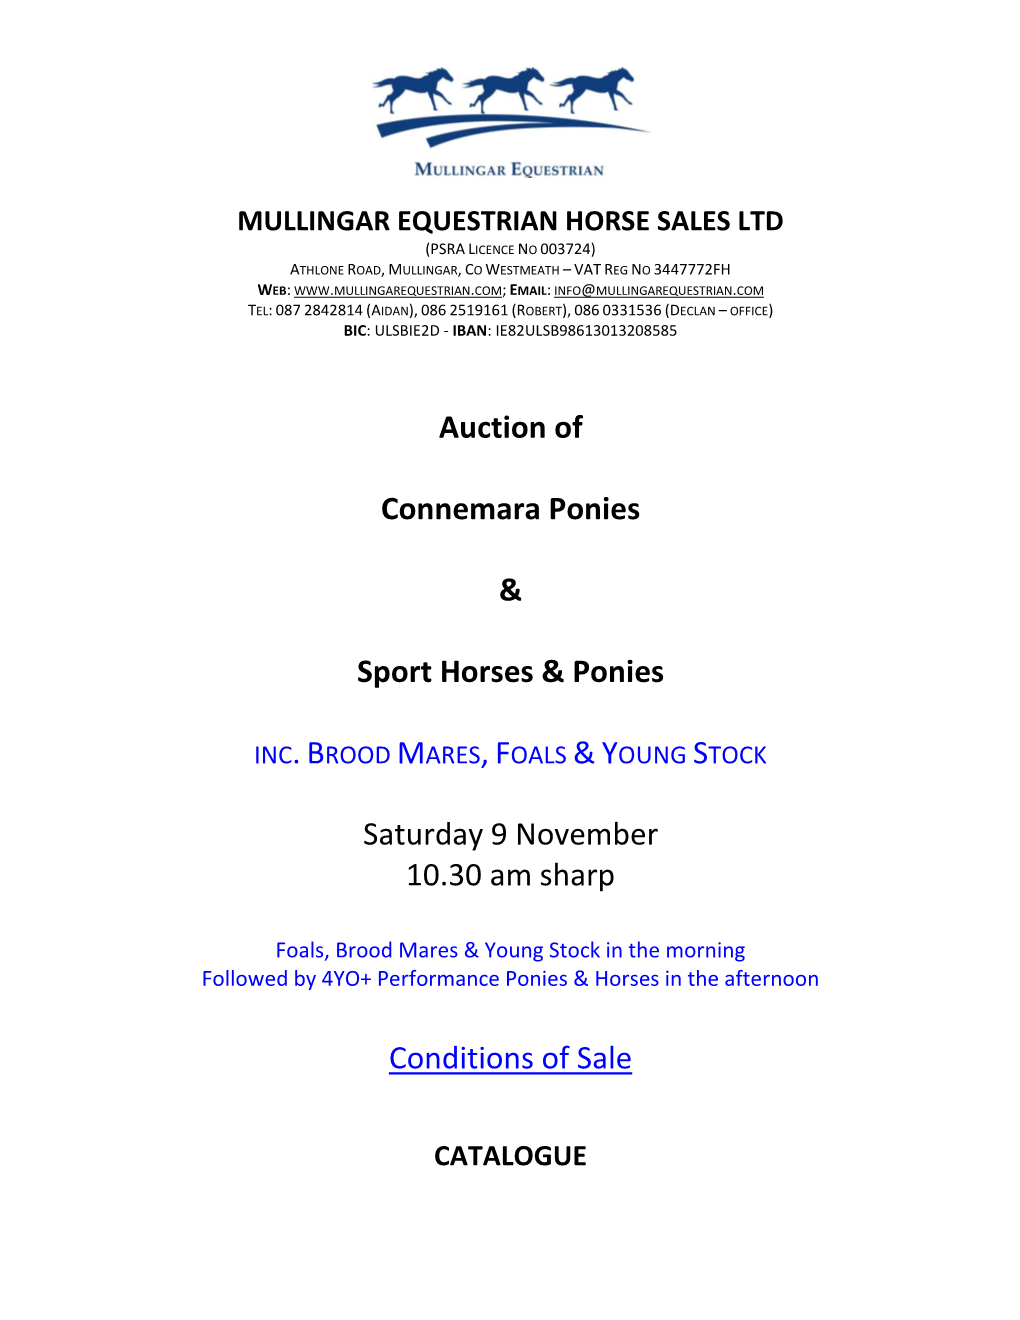 Auction of Connemara Ponies & Sport Horses & Ponies INC.BROOD